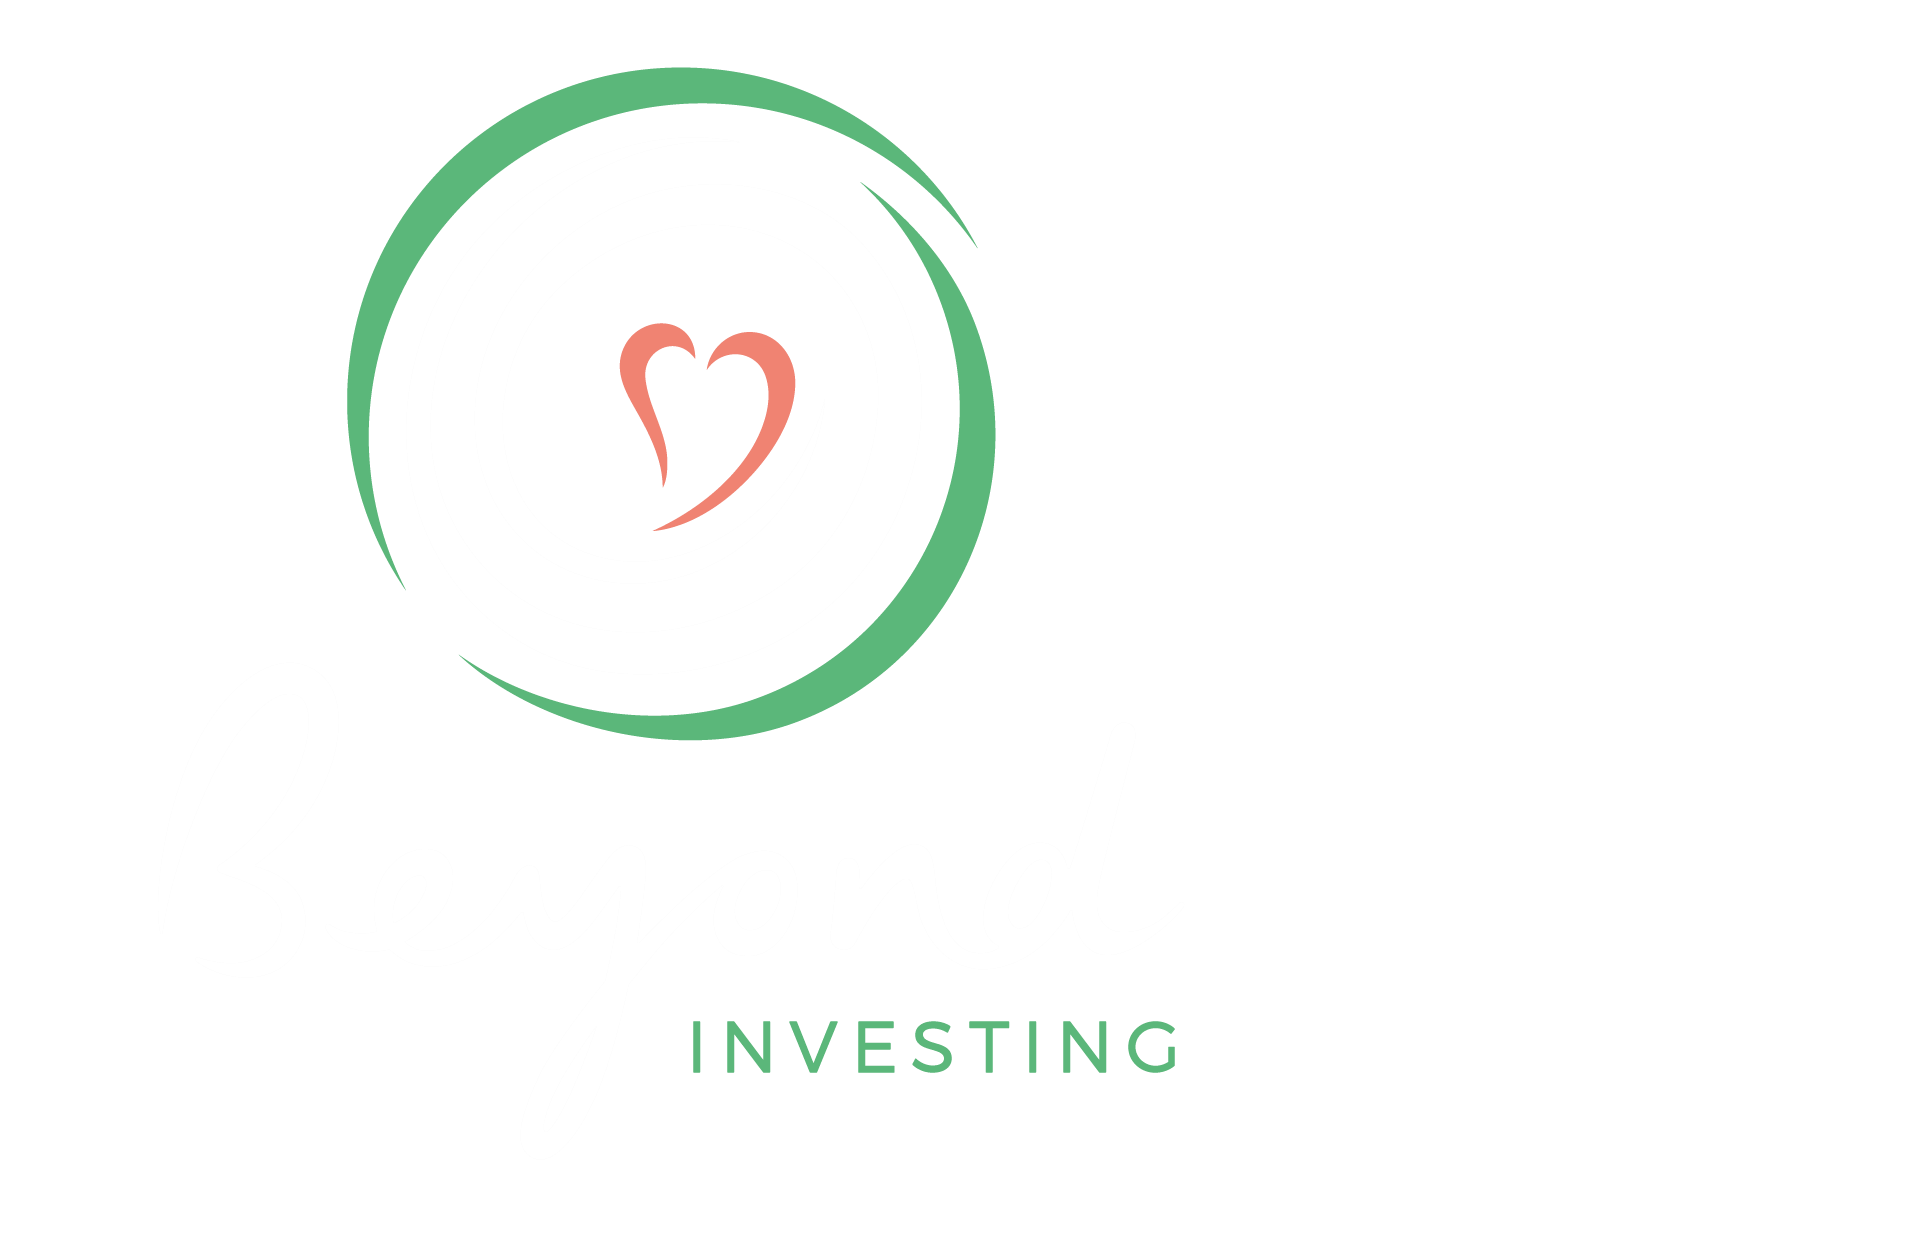 Beyond Investing